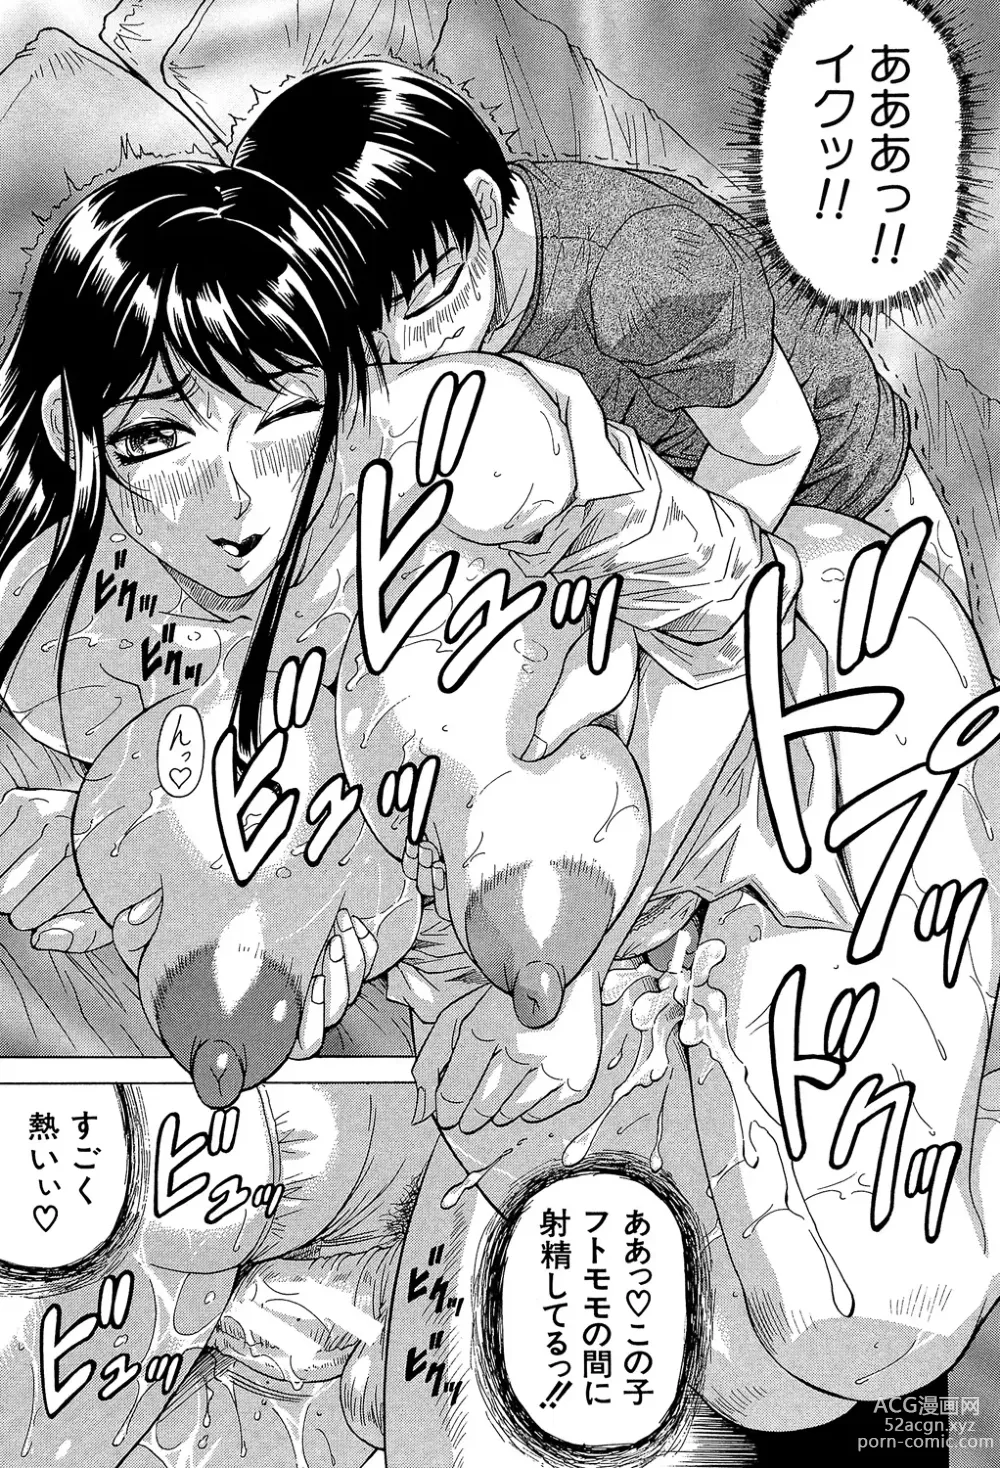 Page 203 of manga Oyako no Utage